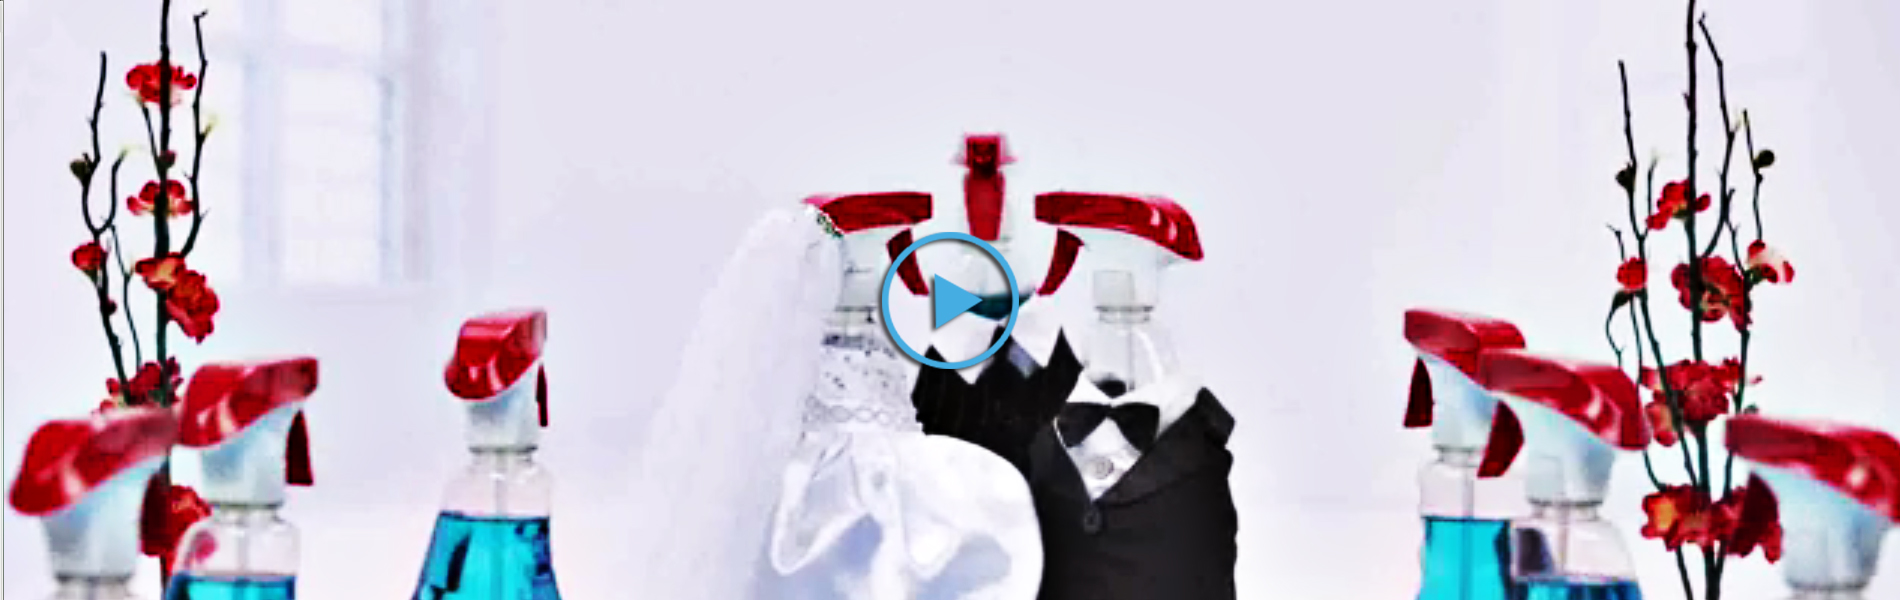 Windex® Brand and My Big Fat Greek Wedding 2